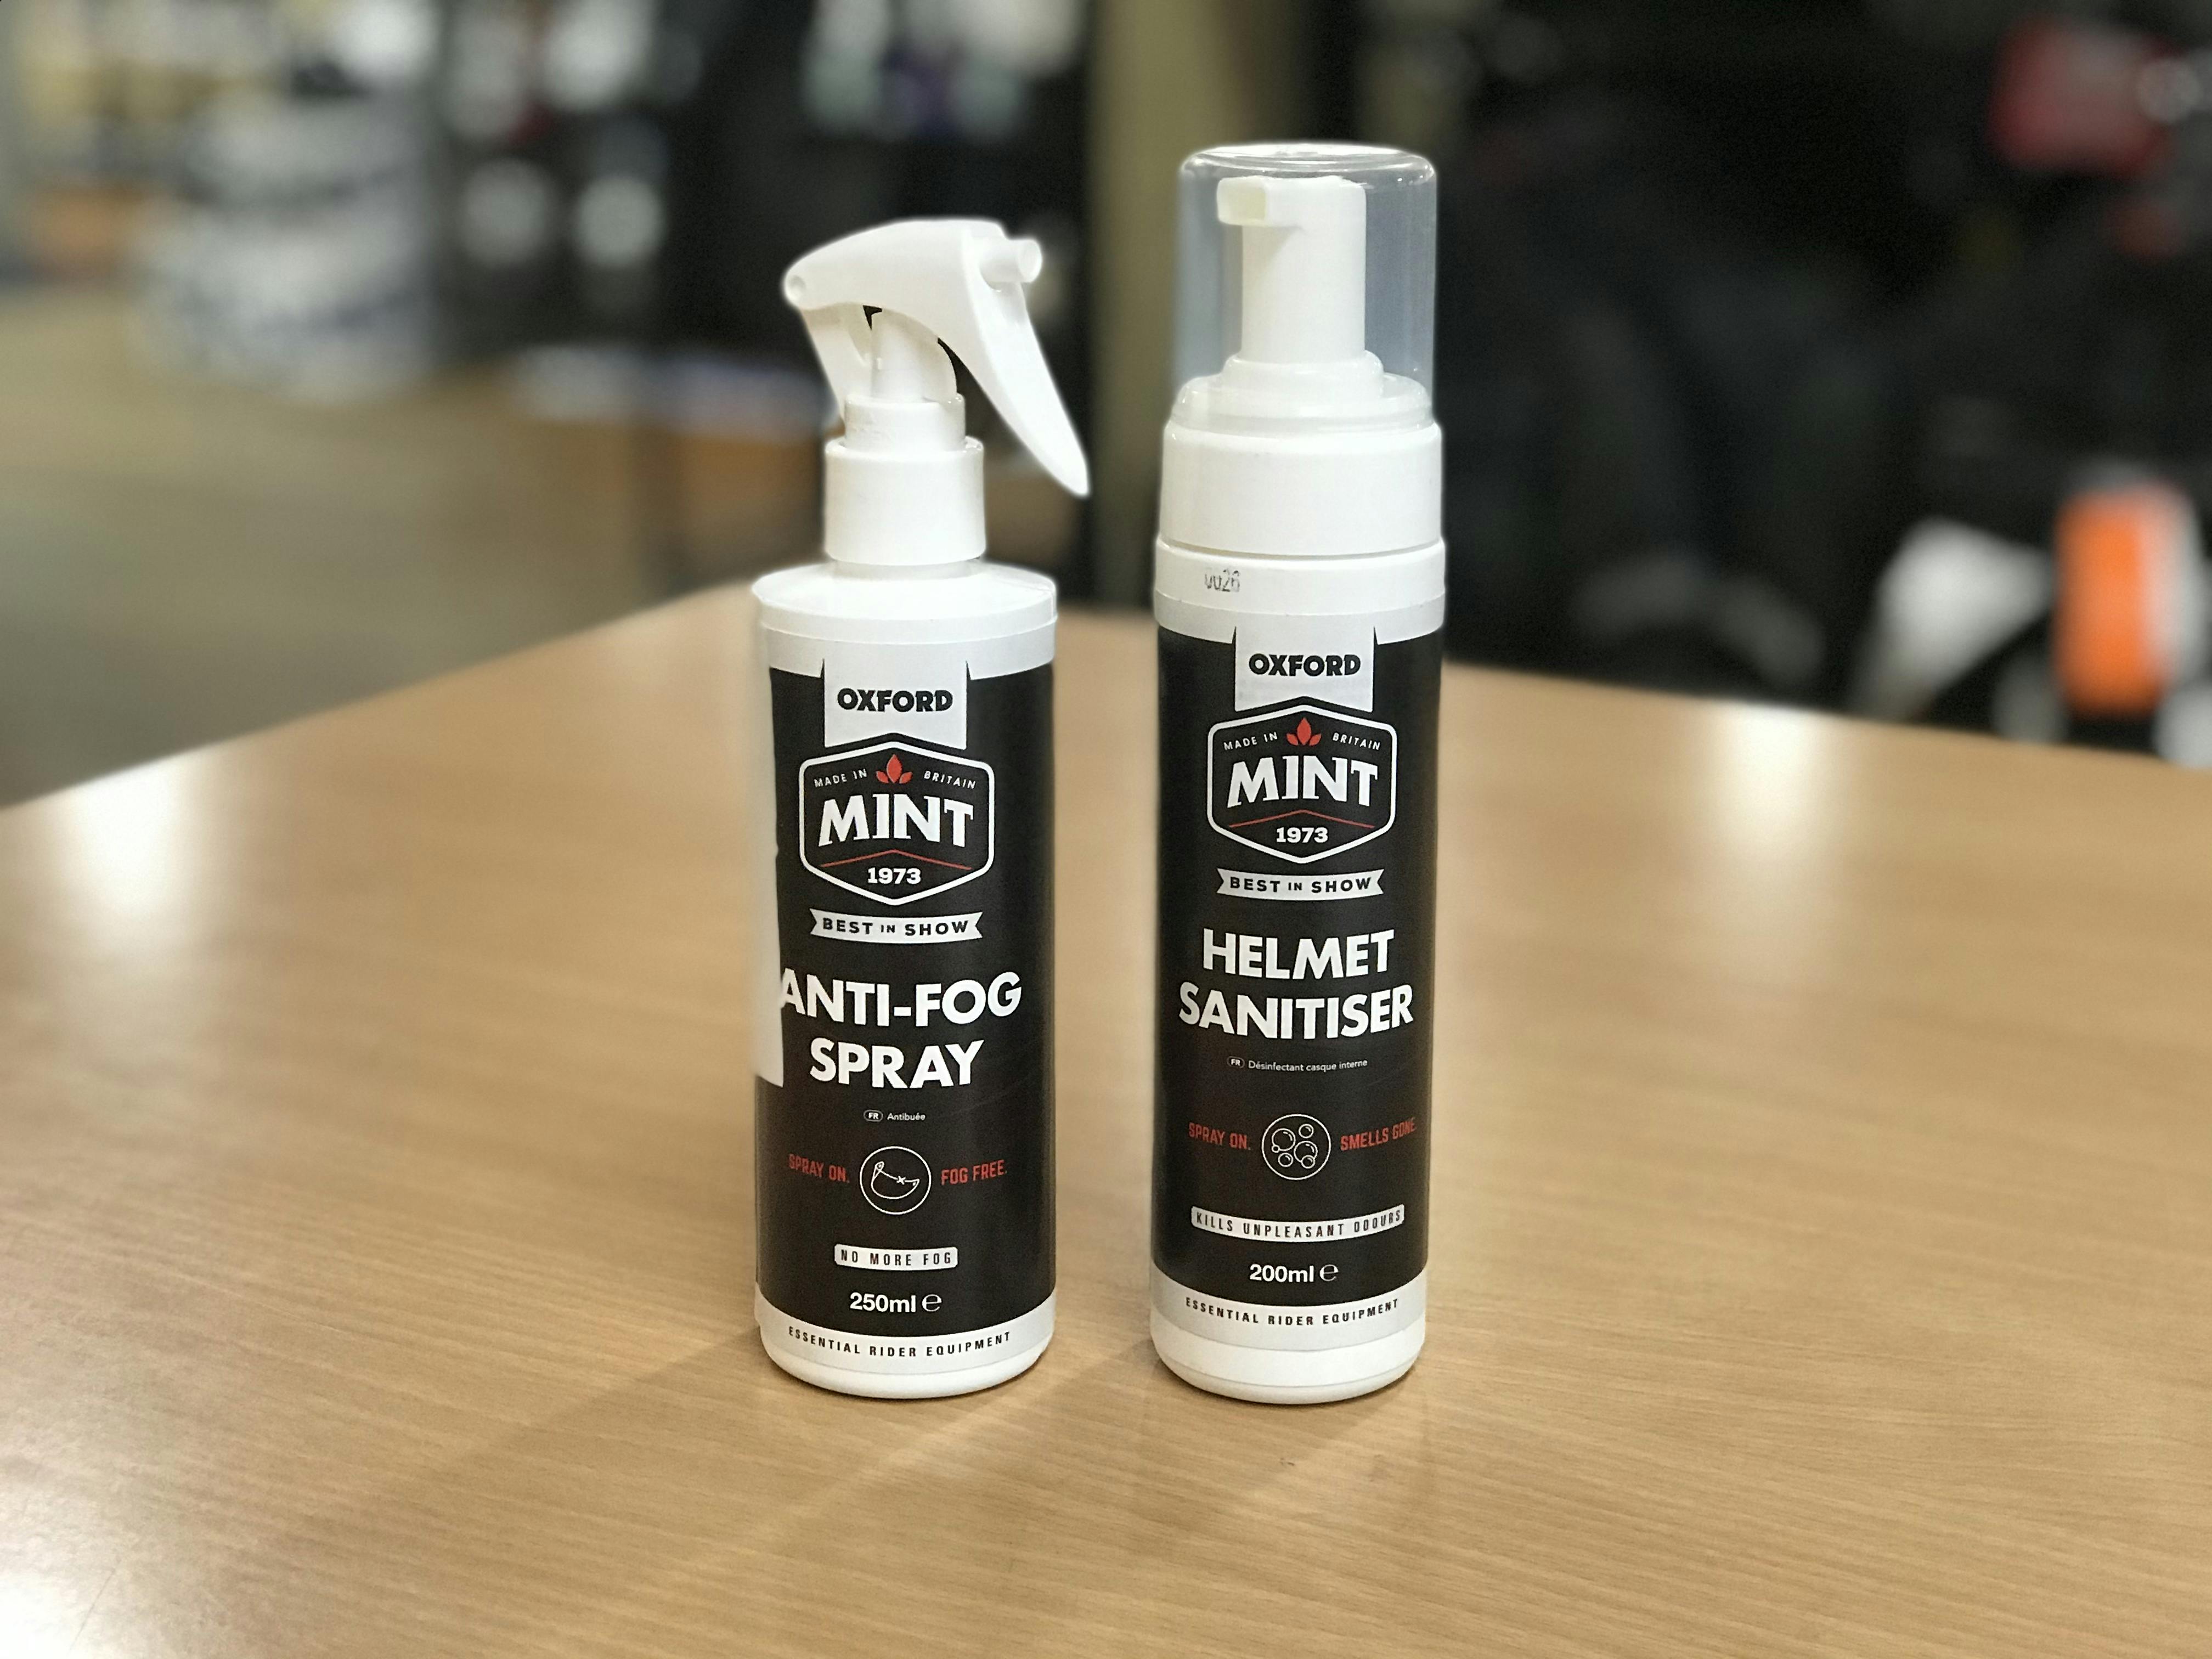 A both each of Mint Anti-Fog Spray & Helmet Sanitiser.